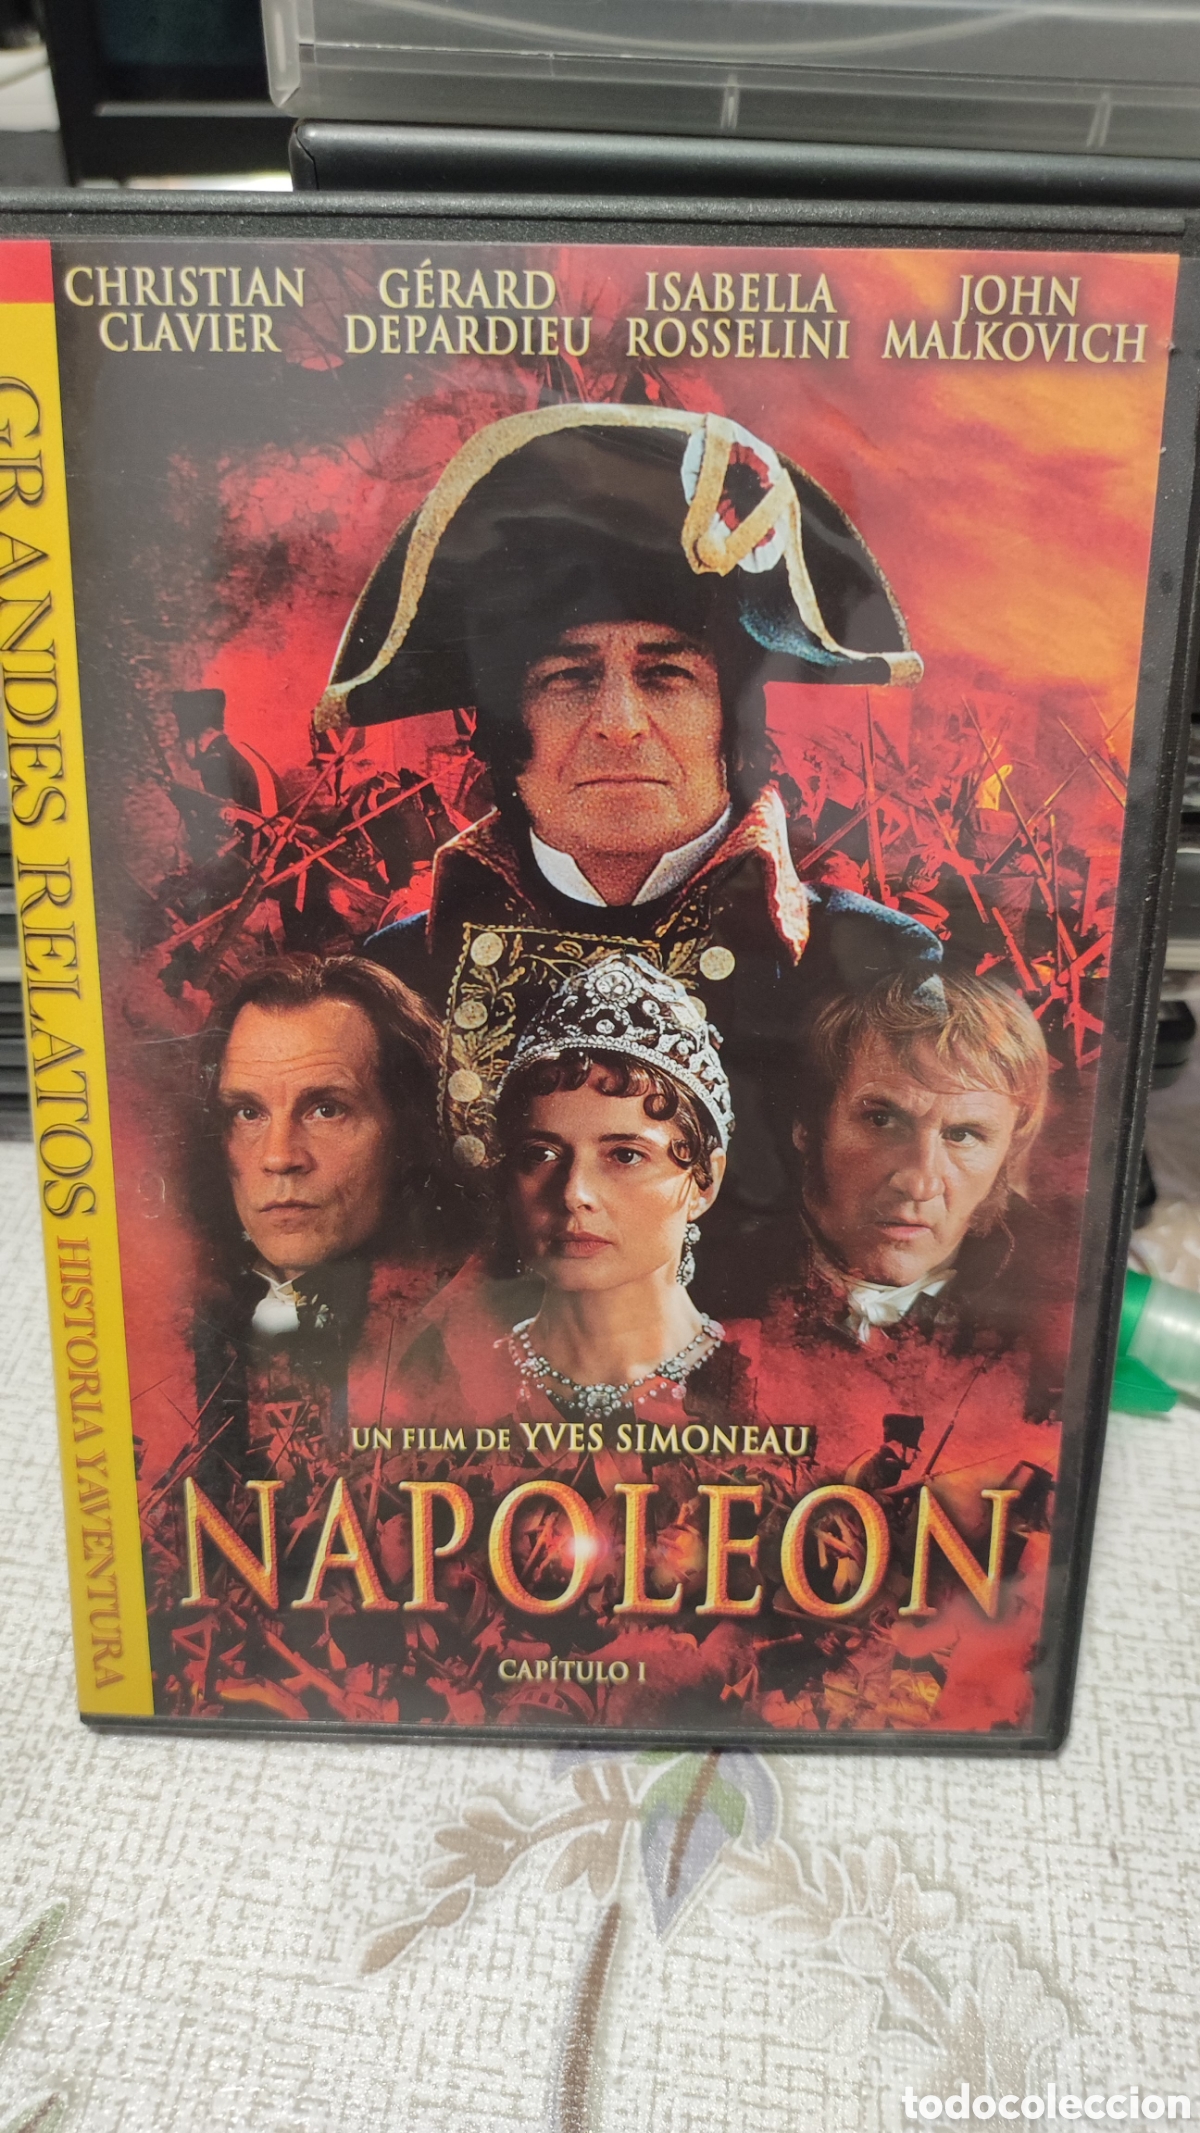 napoleón dvd - Acheter Séries TV en DVD sur todocoleccion